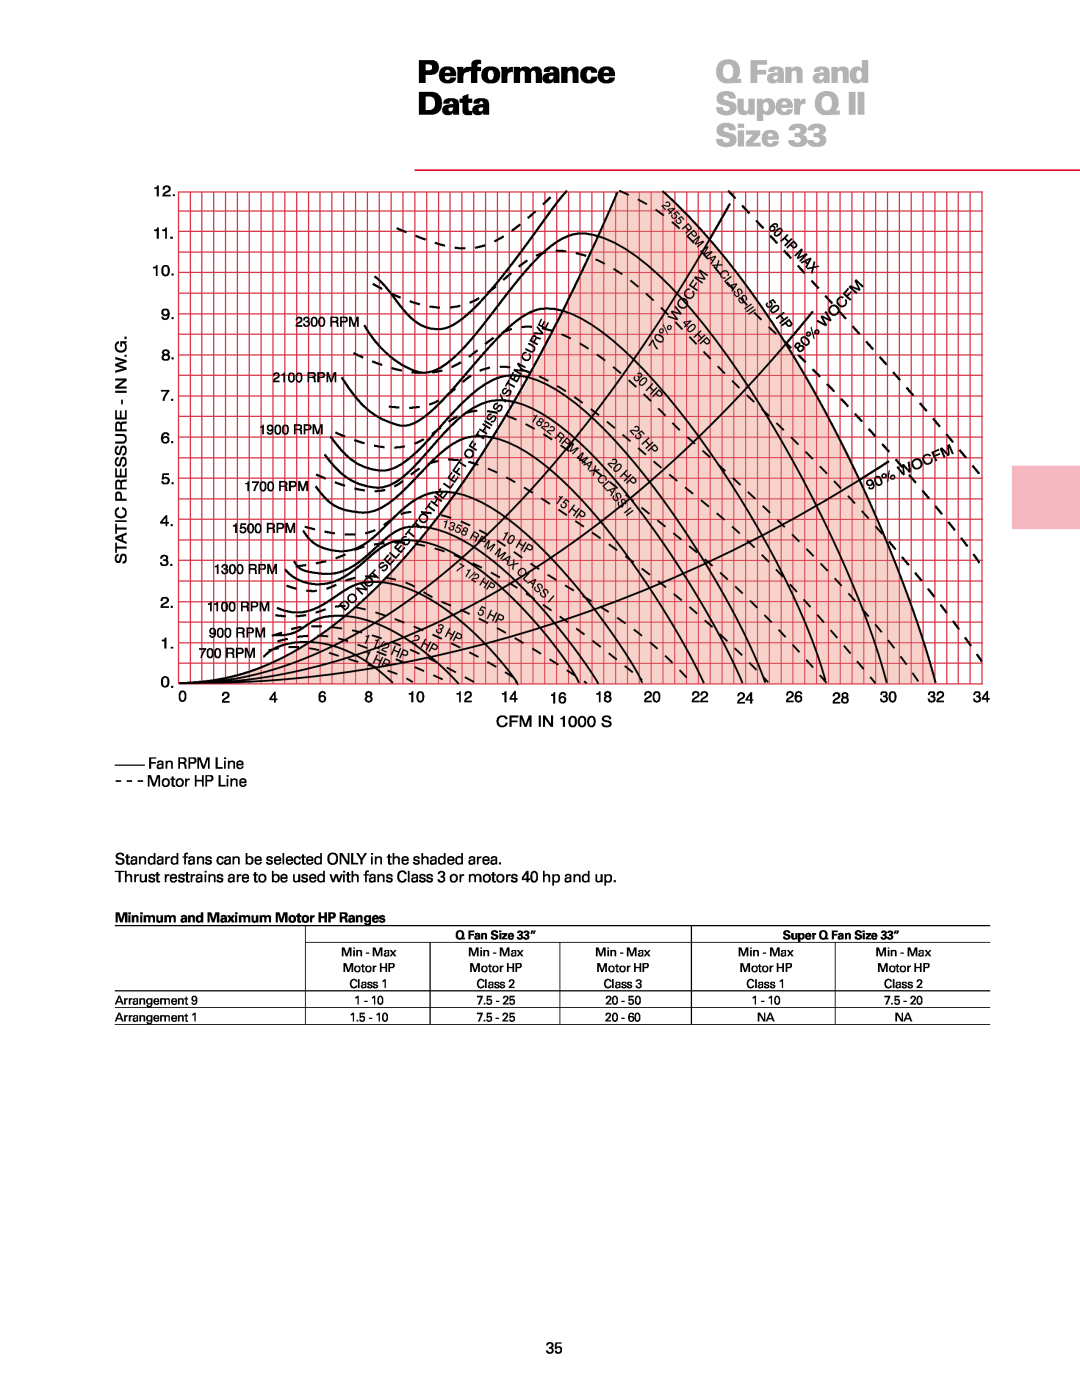 Trane manual Performance, Q Fan and, Data, Super Q Fan Size 33” 